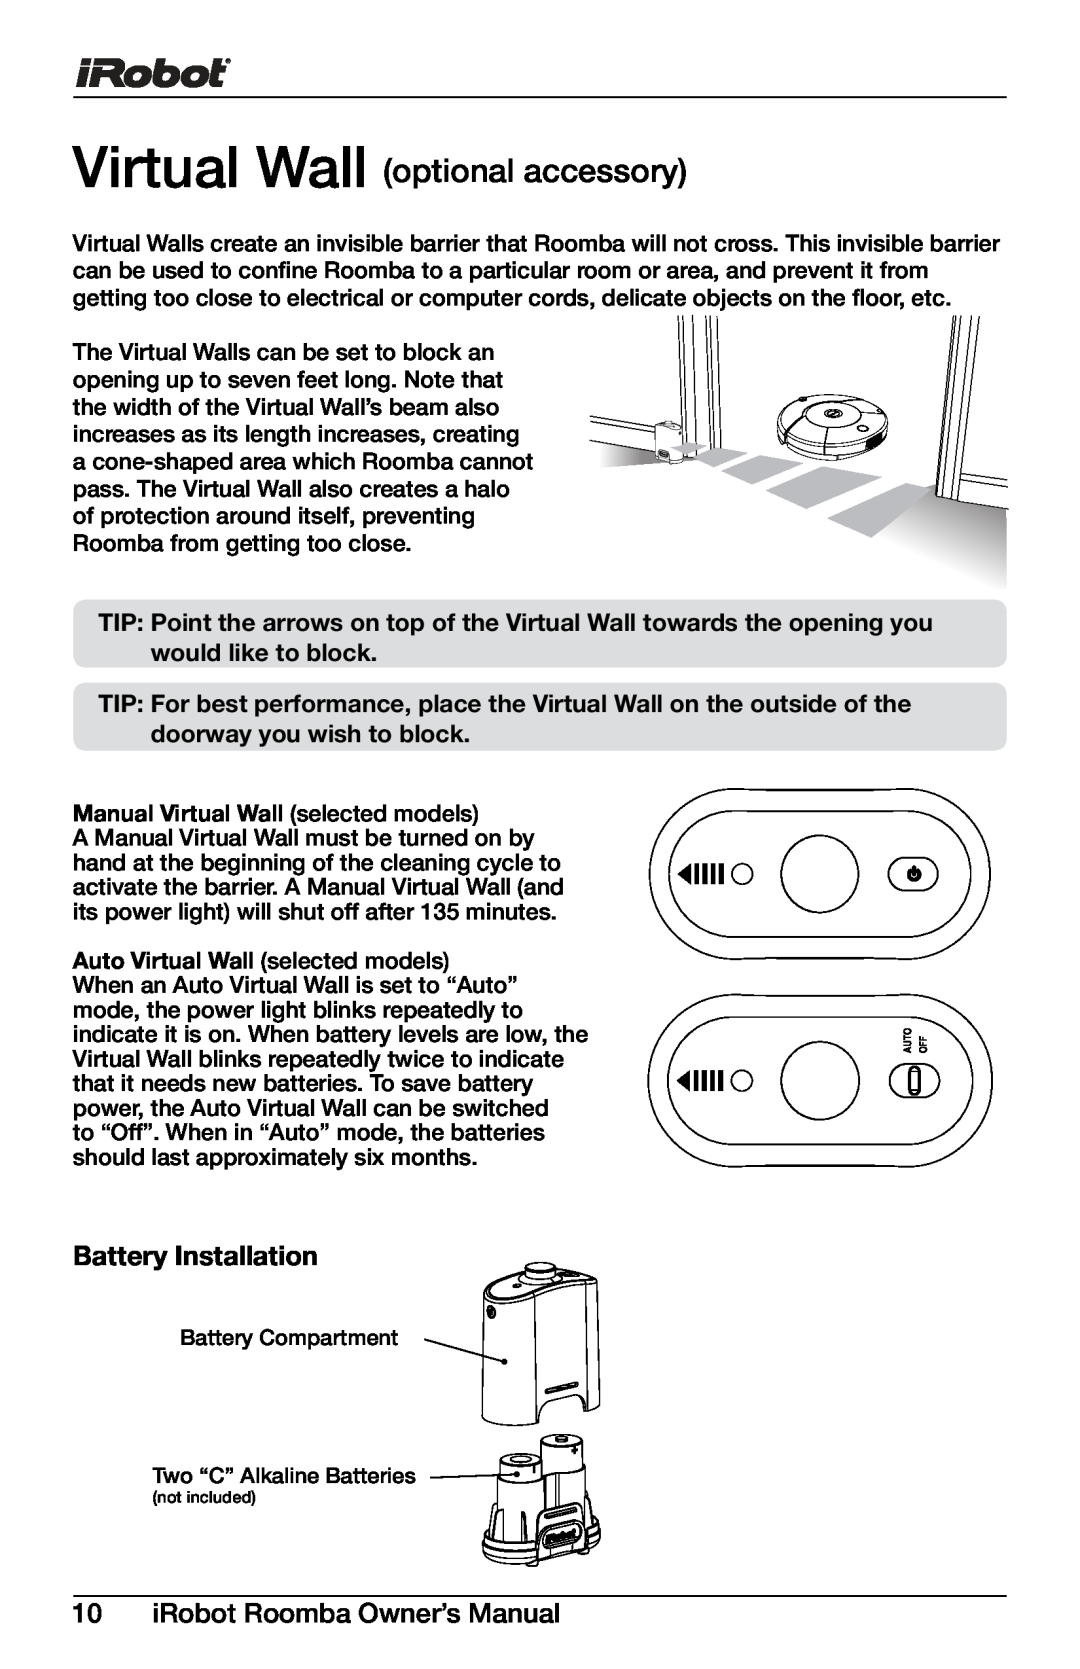 iRobot 400 Series, 430 manual Virtual Wall optional accessory, Battery Installation 